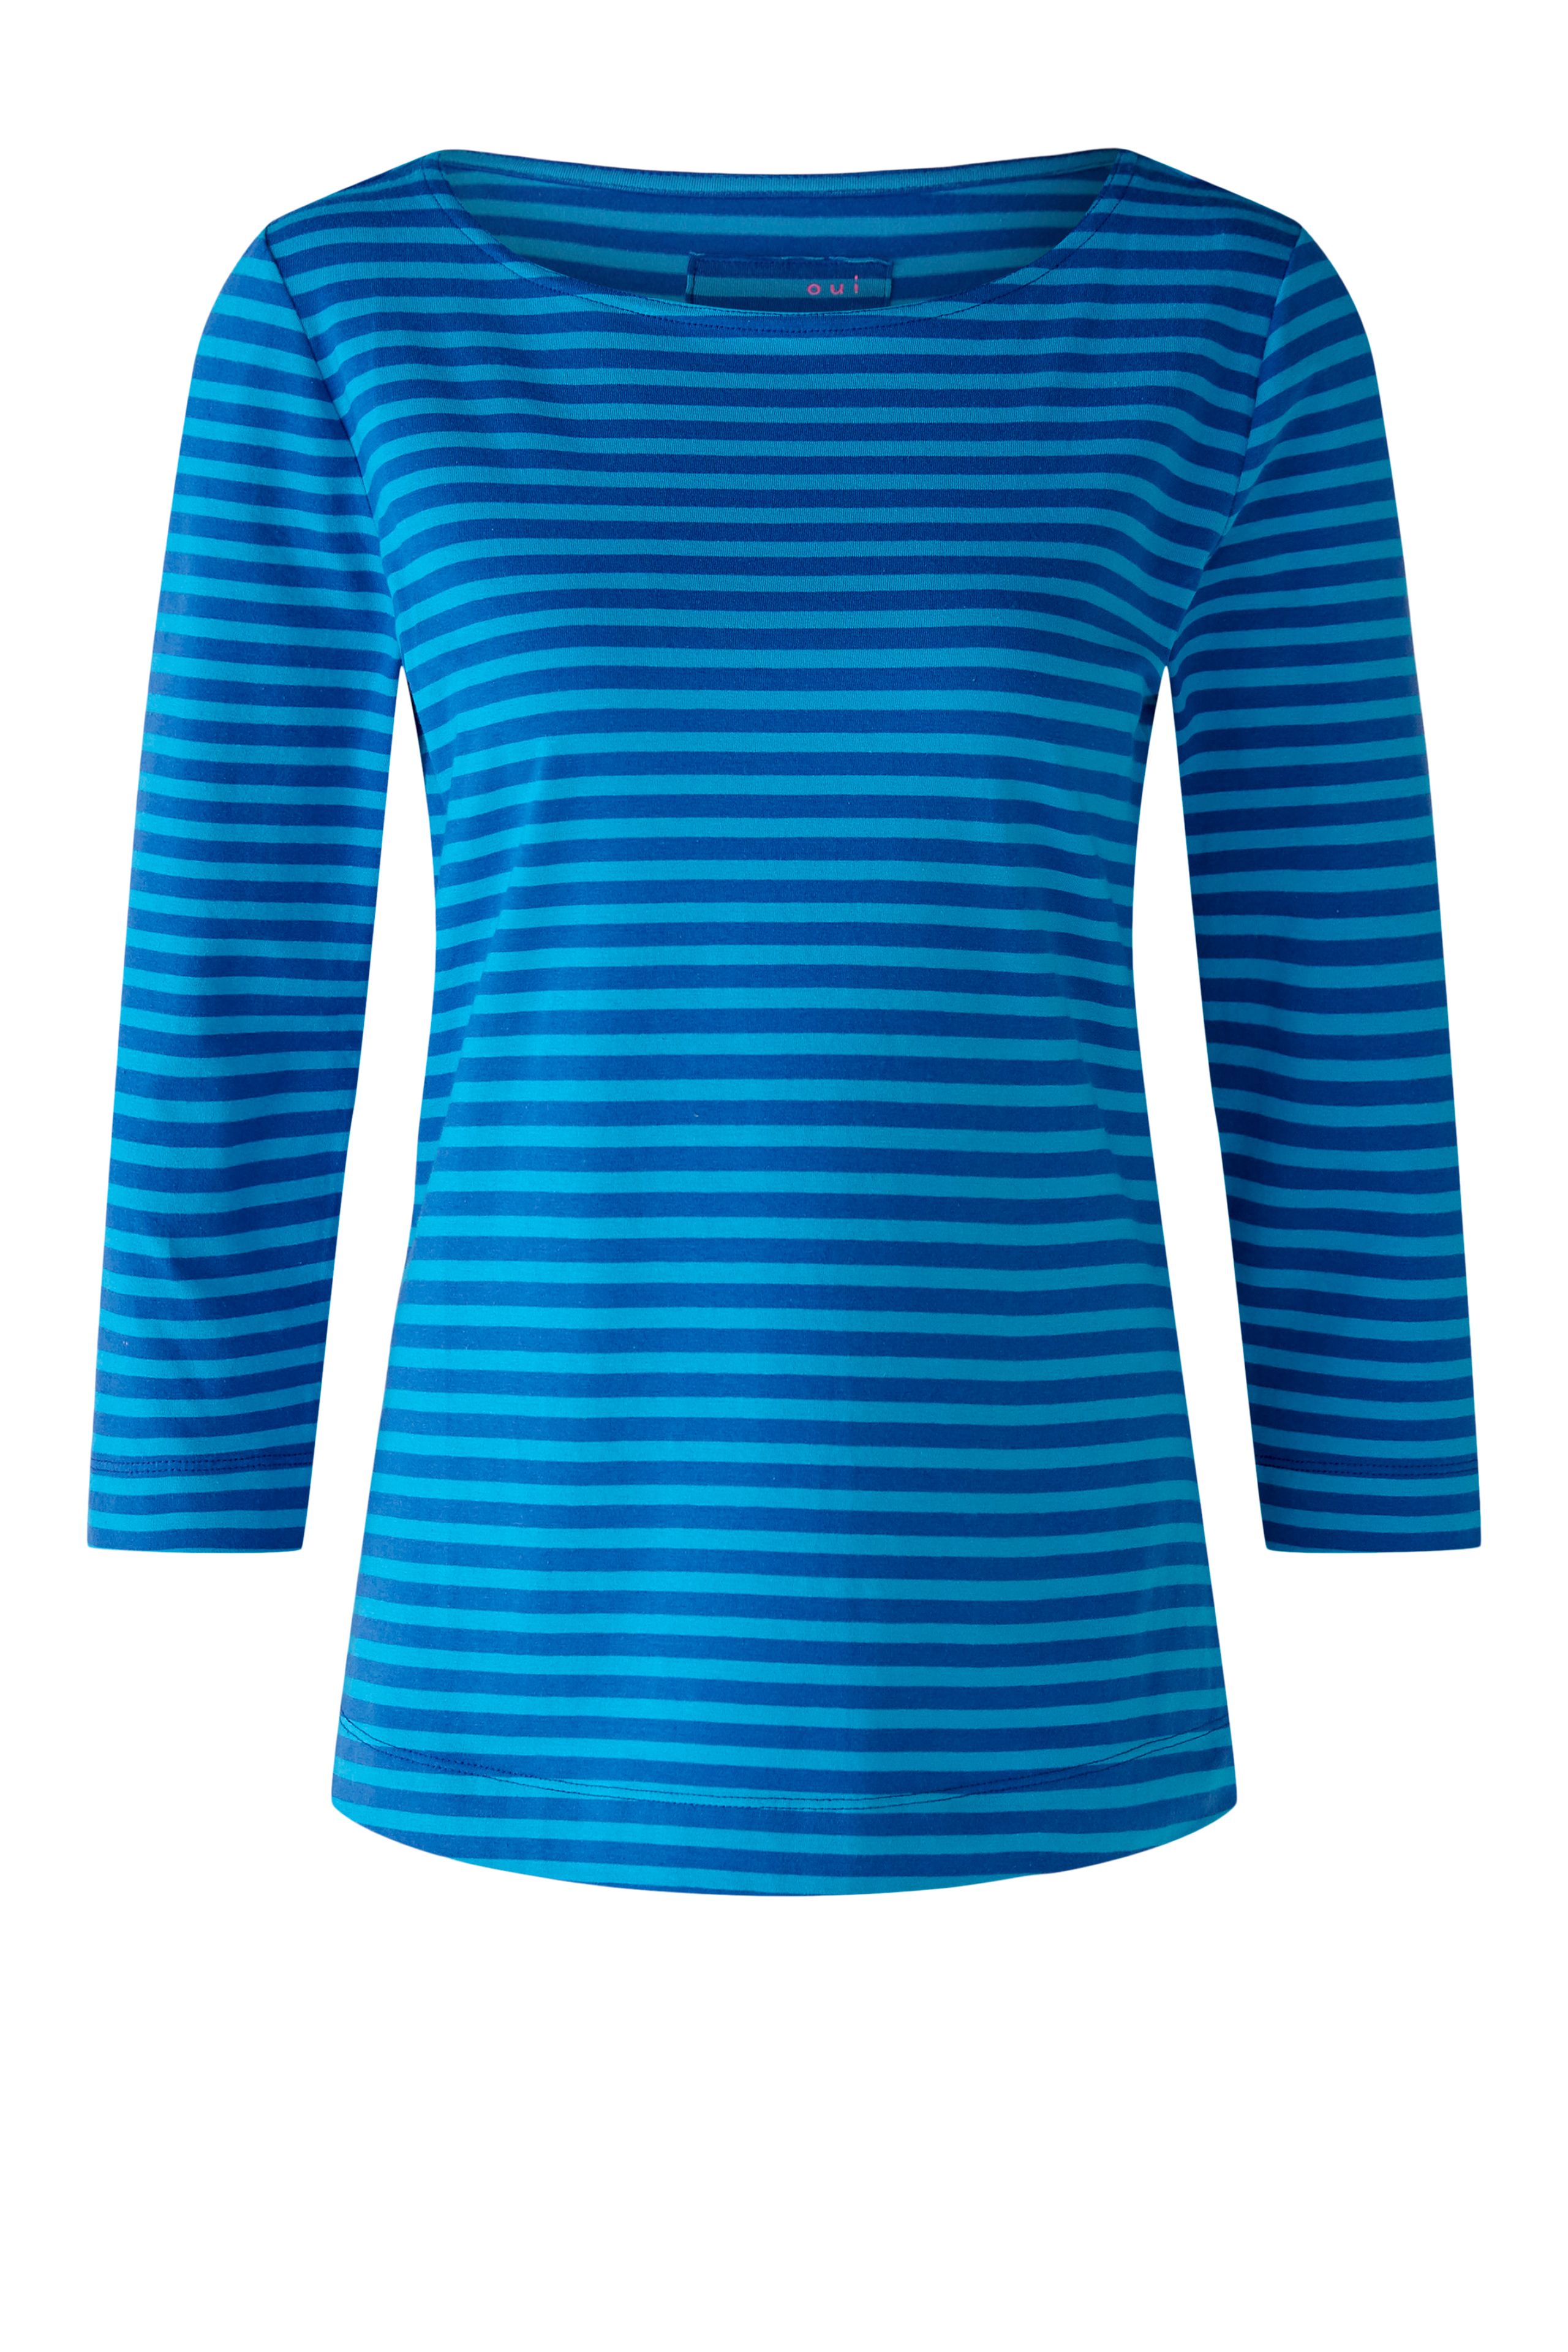 Oui T-Shirt 3/4 Arm  fine Stripe 42 blue